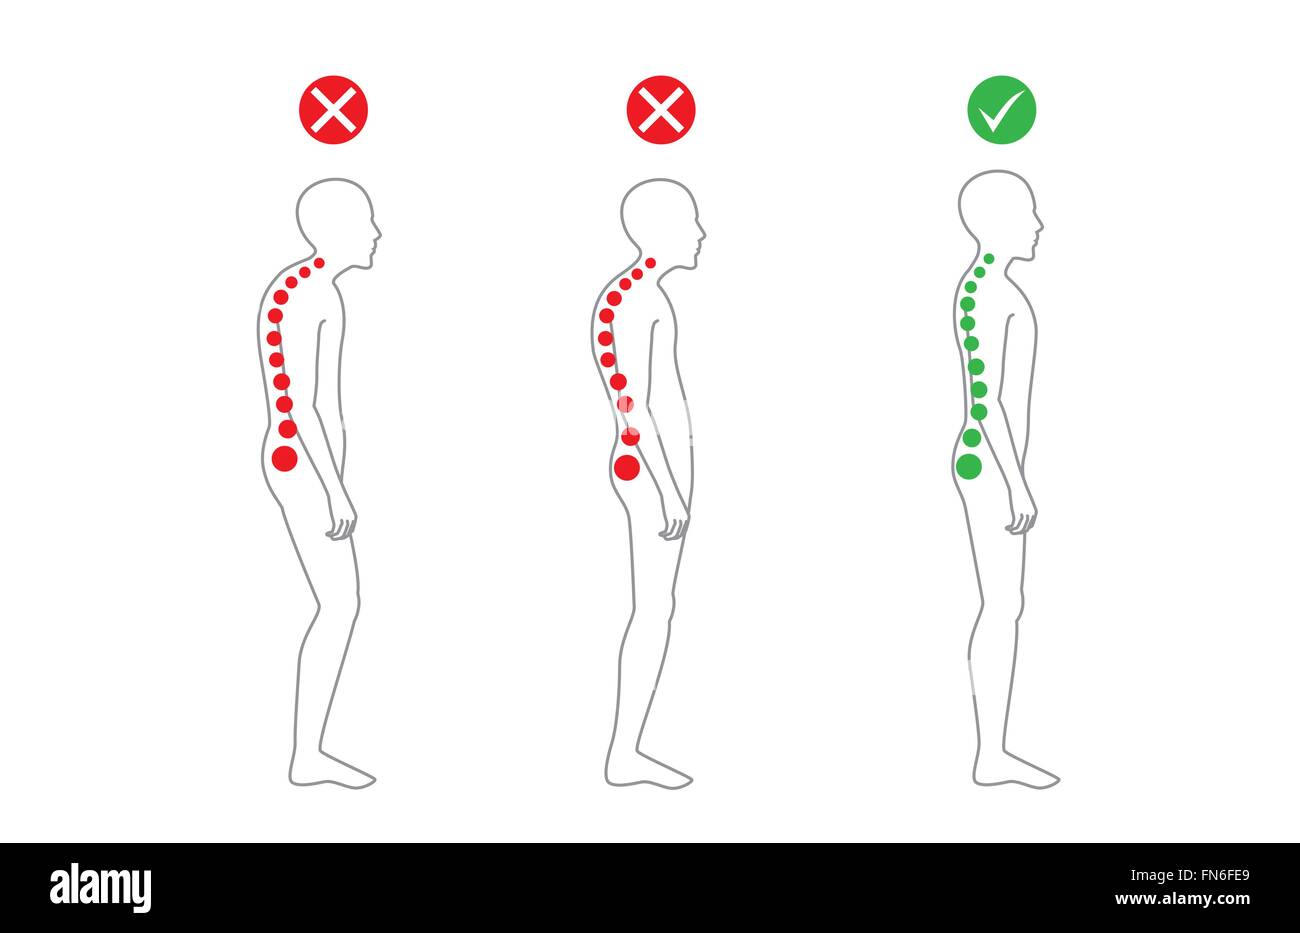 https://c8.alamy.com/comp/FN6FE9/correct-alignment-of-body-in-standing-posture-FN6FE9.jpg